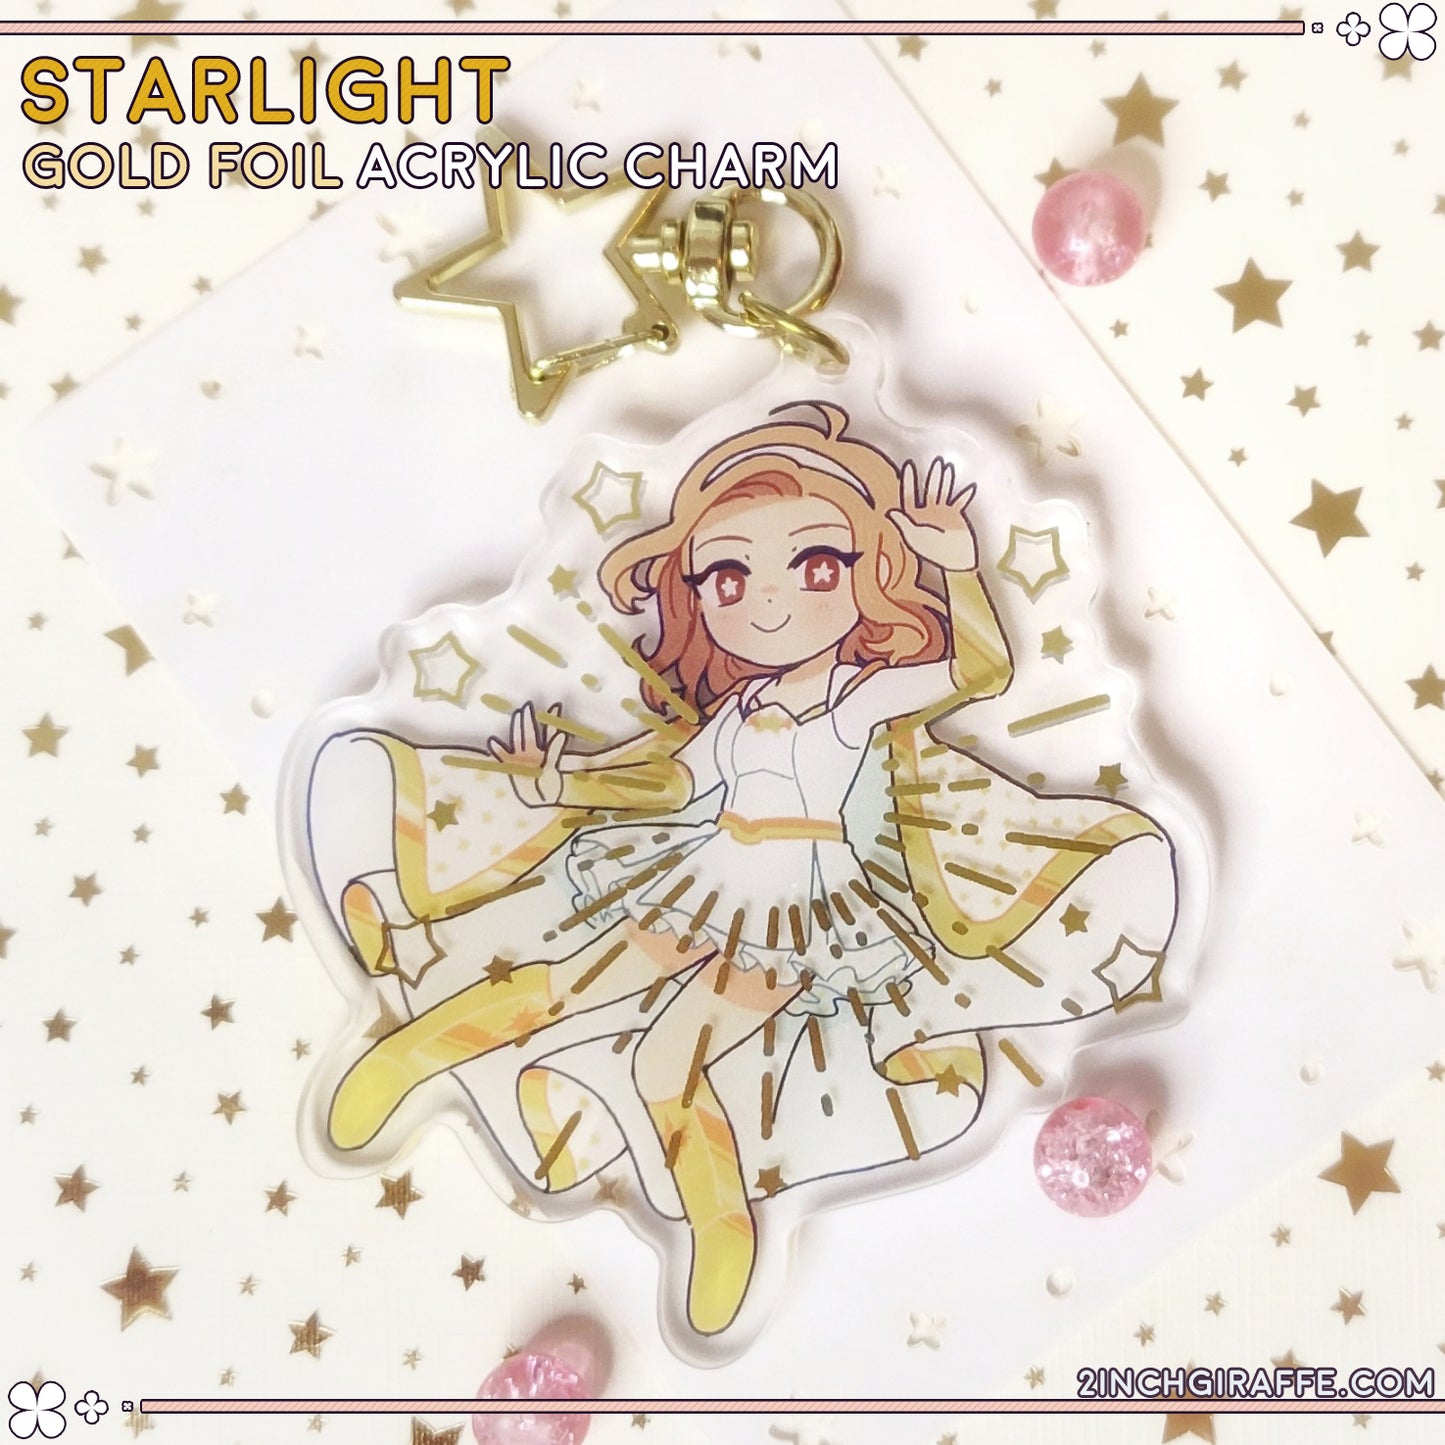 Starlight Gold Foil Charm